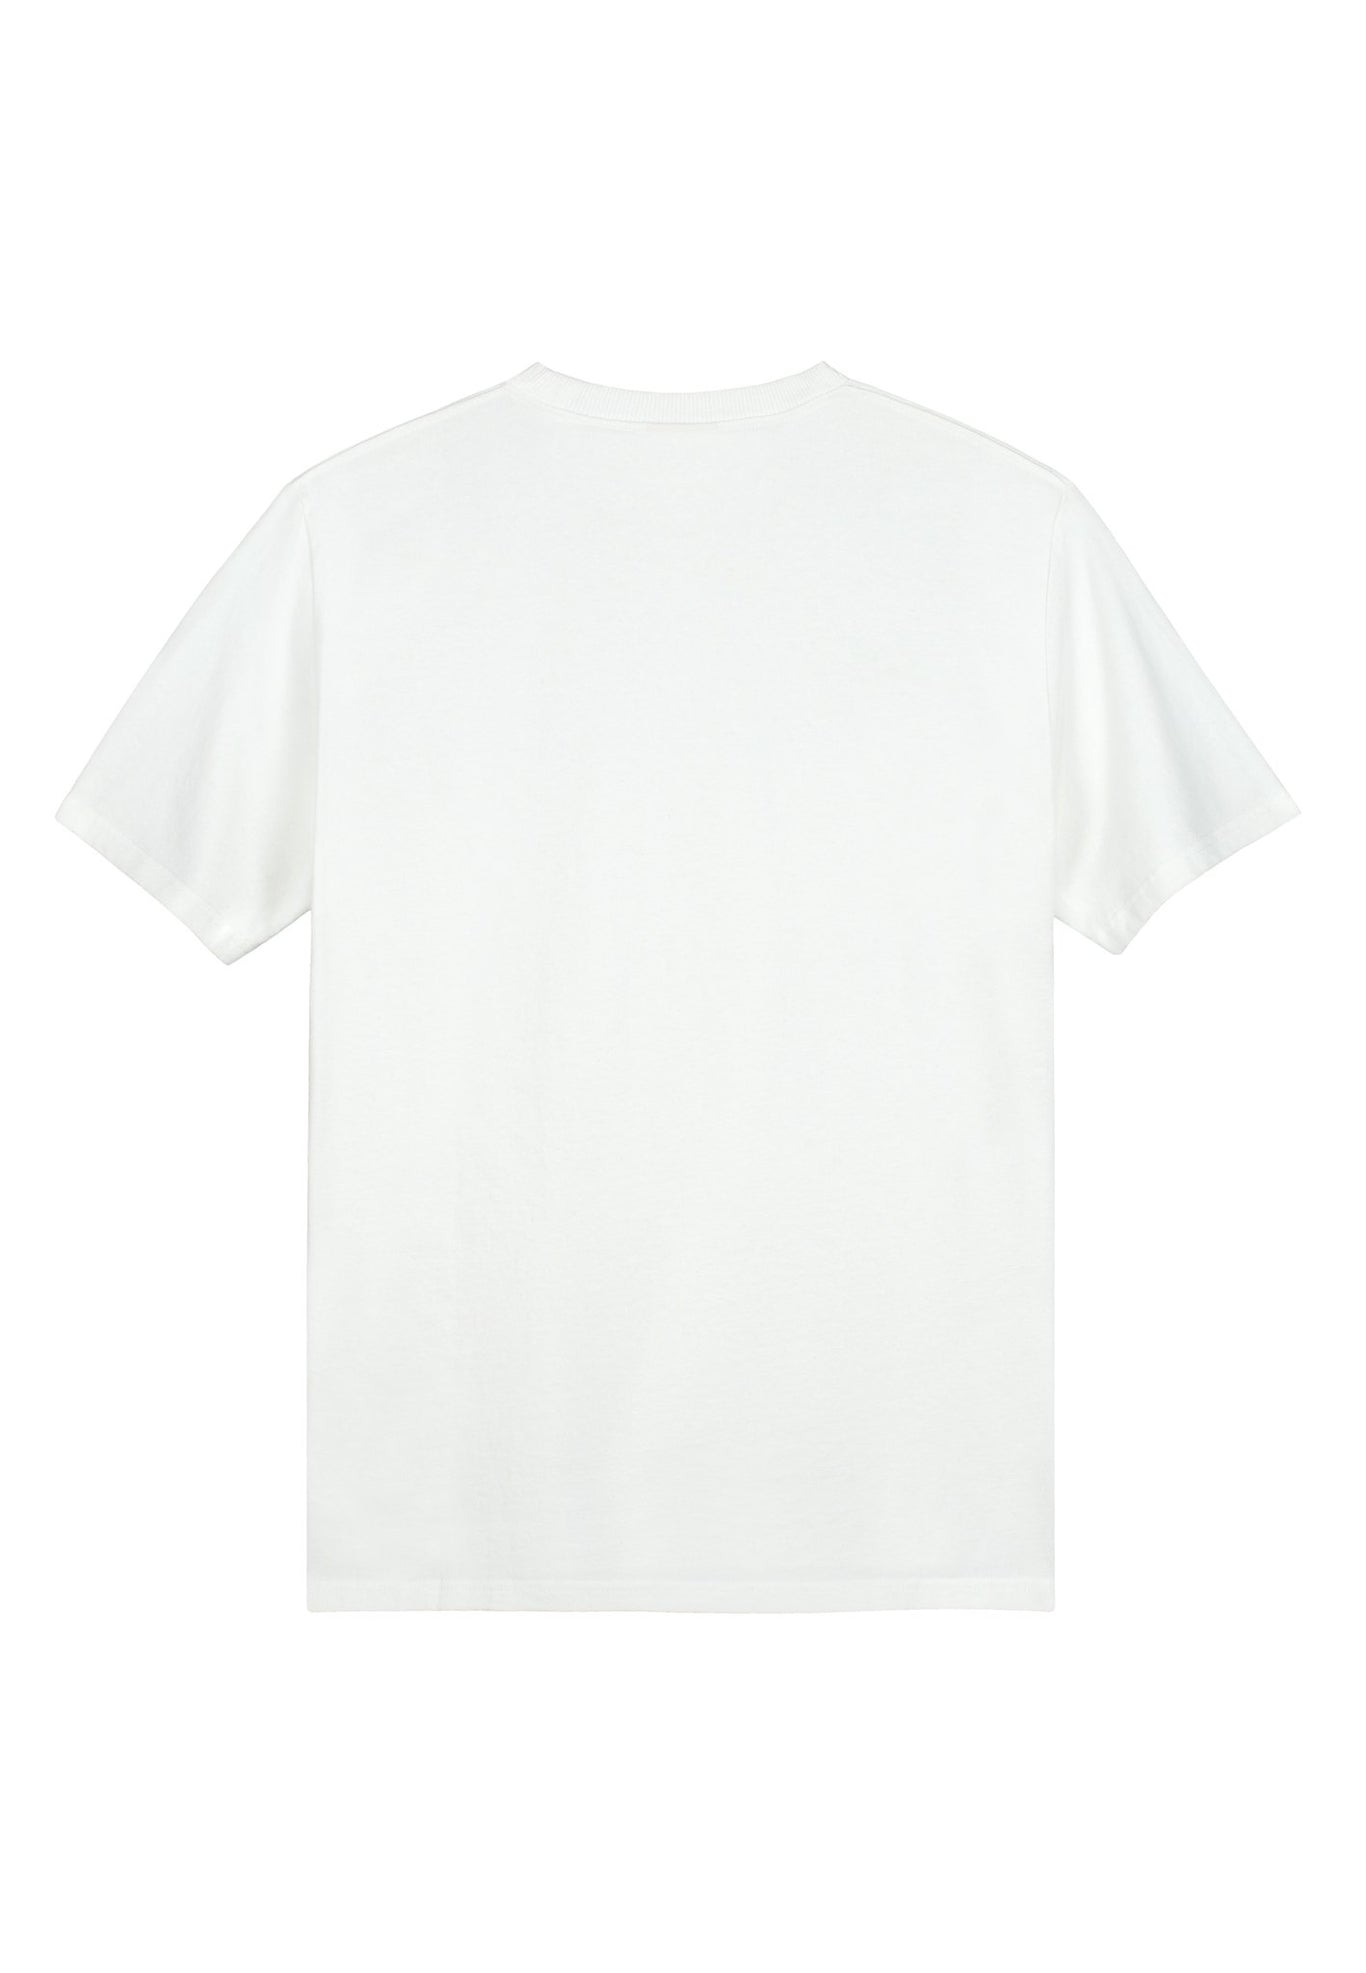 Full Circle White Organic T-shirt